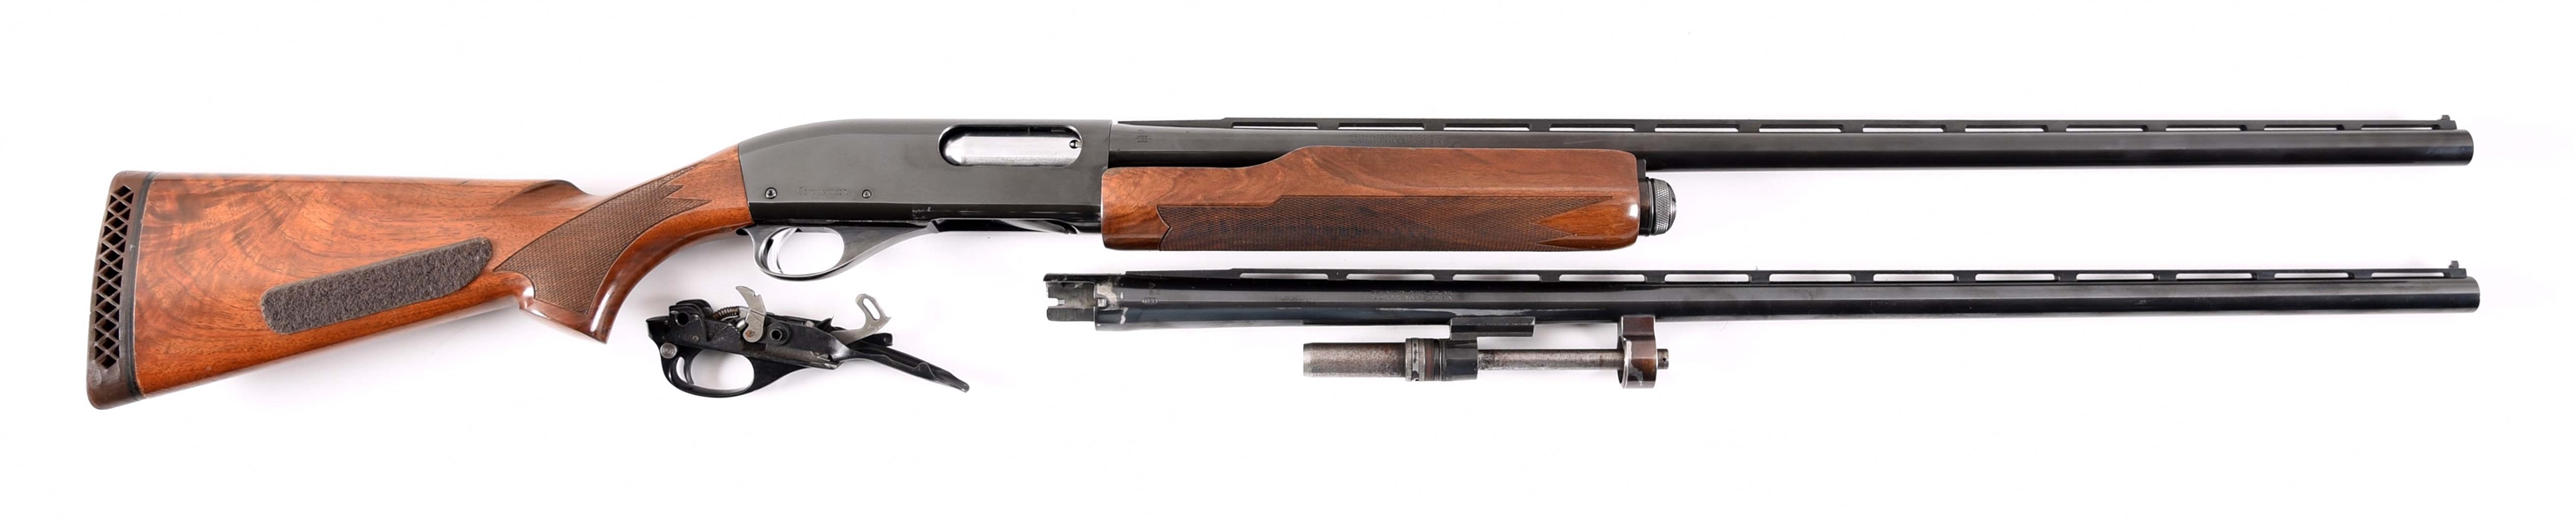 (M) REMINGTON MODEL 870 COMEPTITION TRAP SINGLE SHOT SHOTGUN WITH 2 BARRELS.